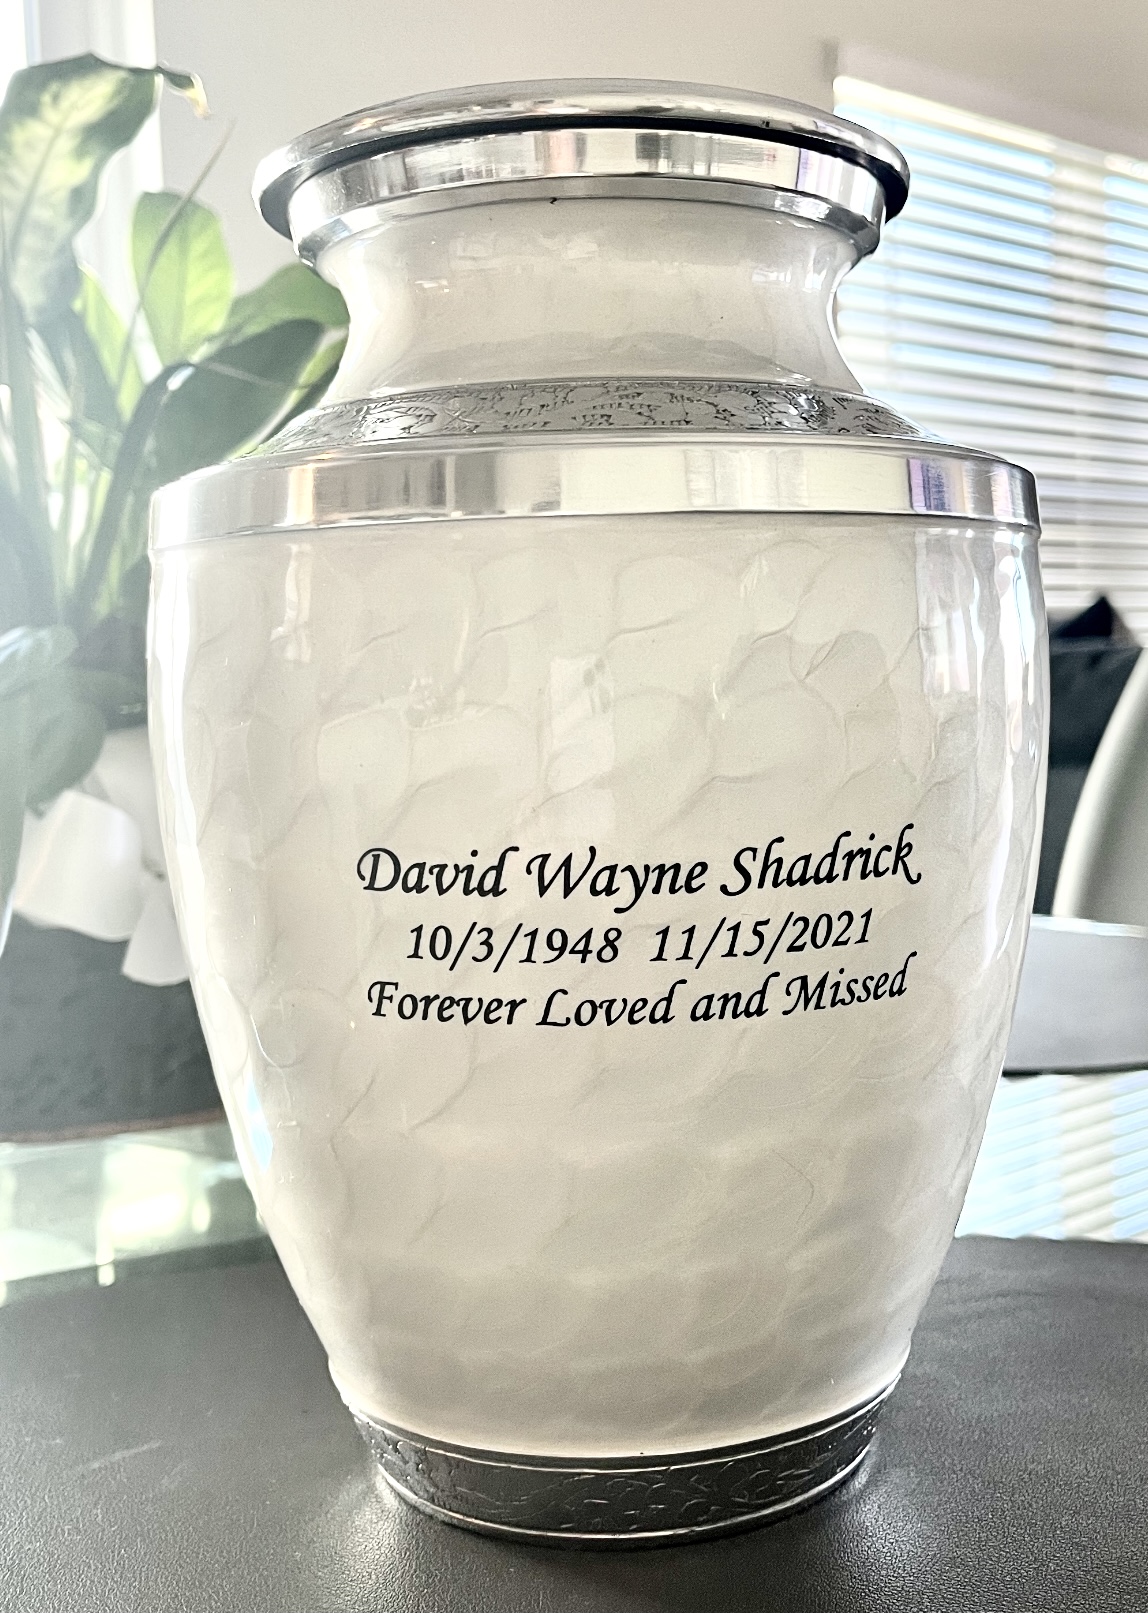 David Wayne Shadrick u will Always be missed and forever loved